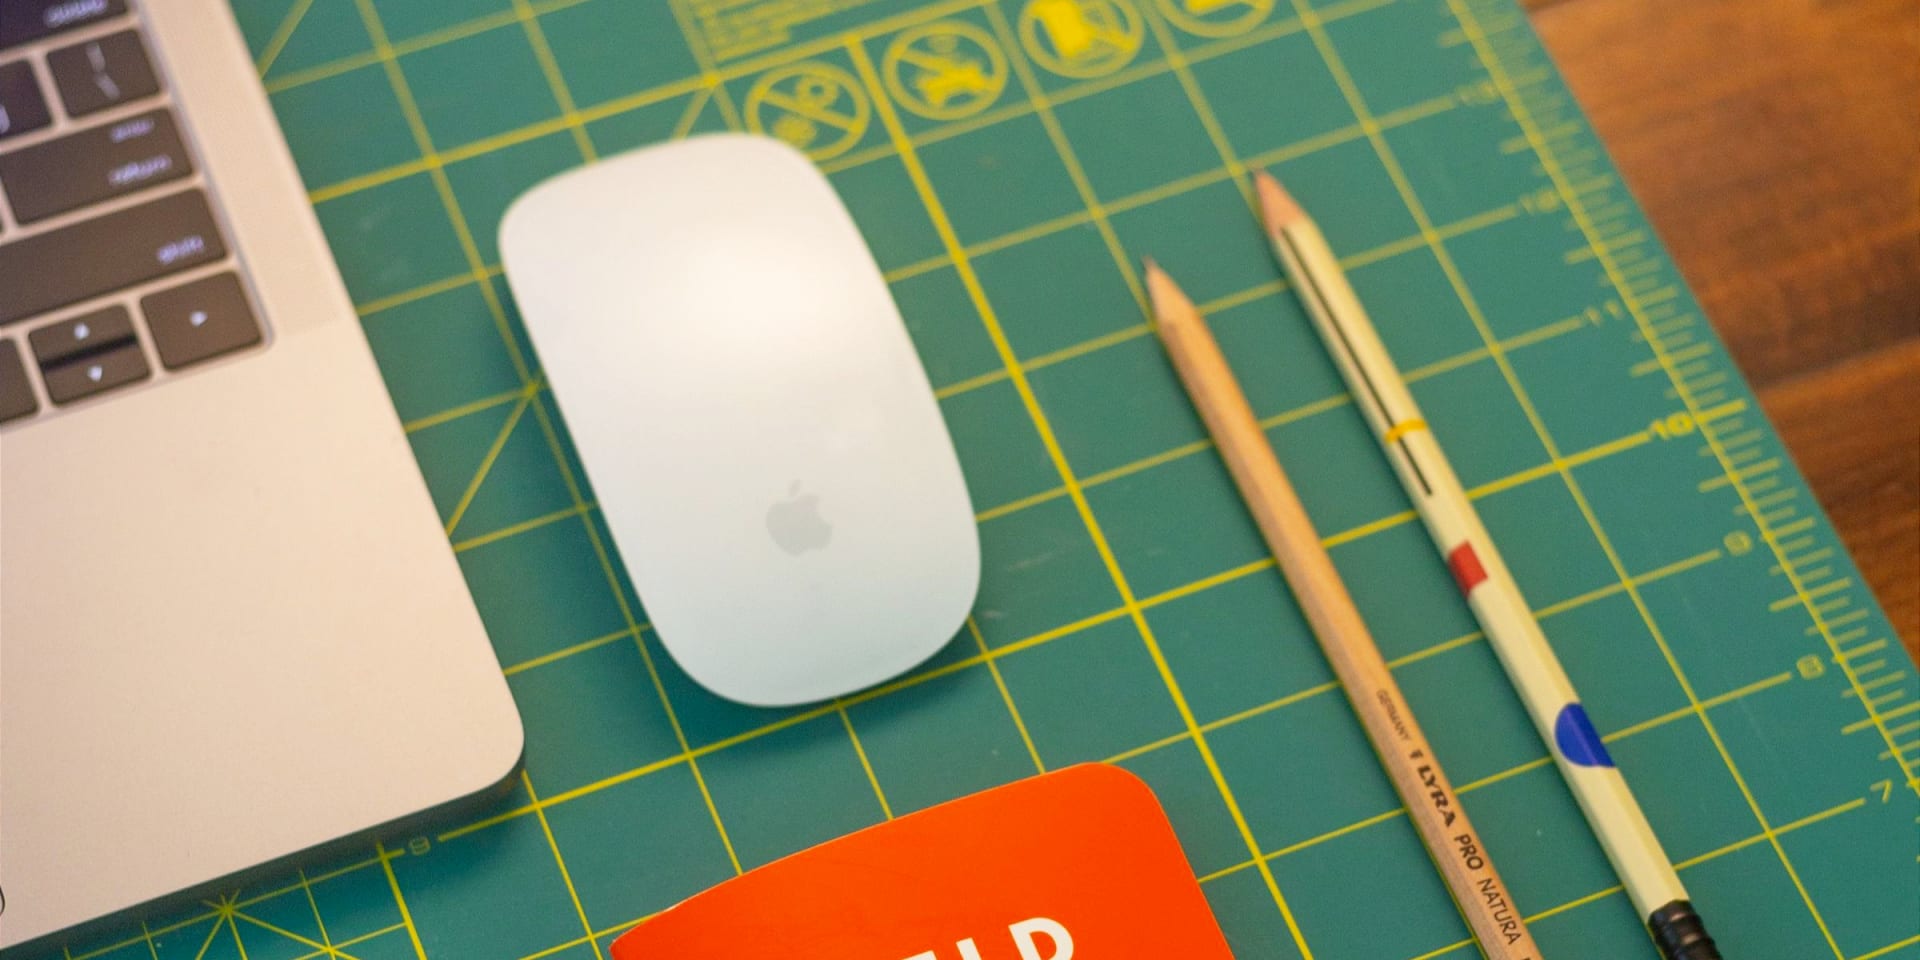 makeshift mousepad and alternatives